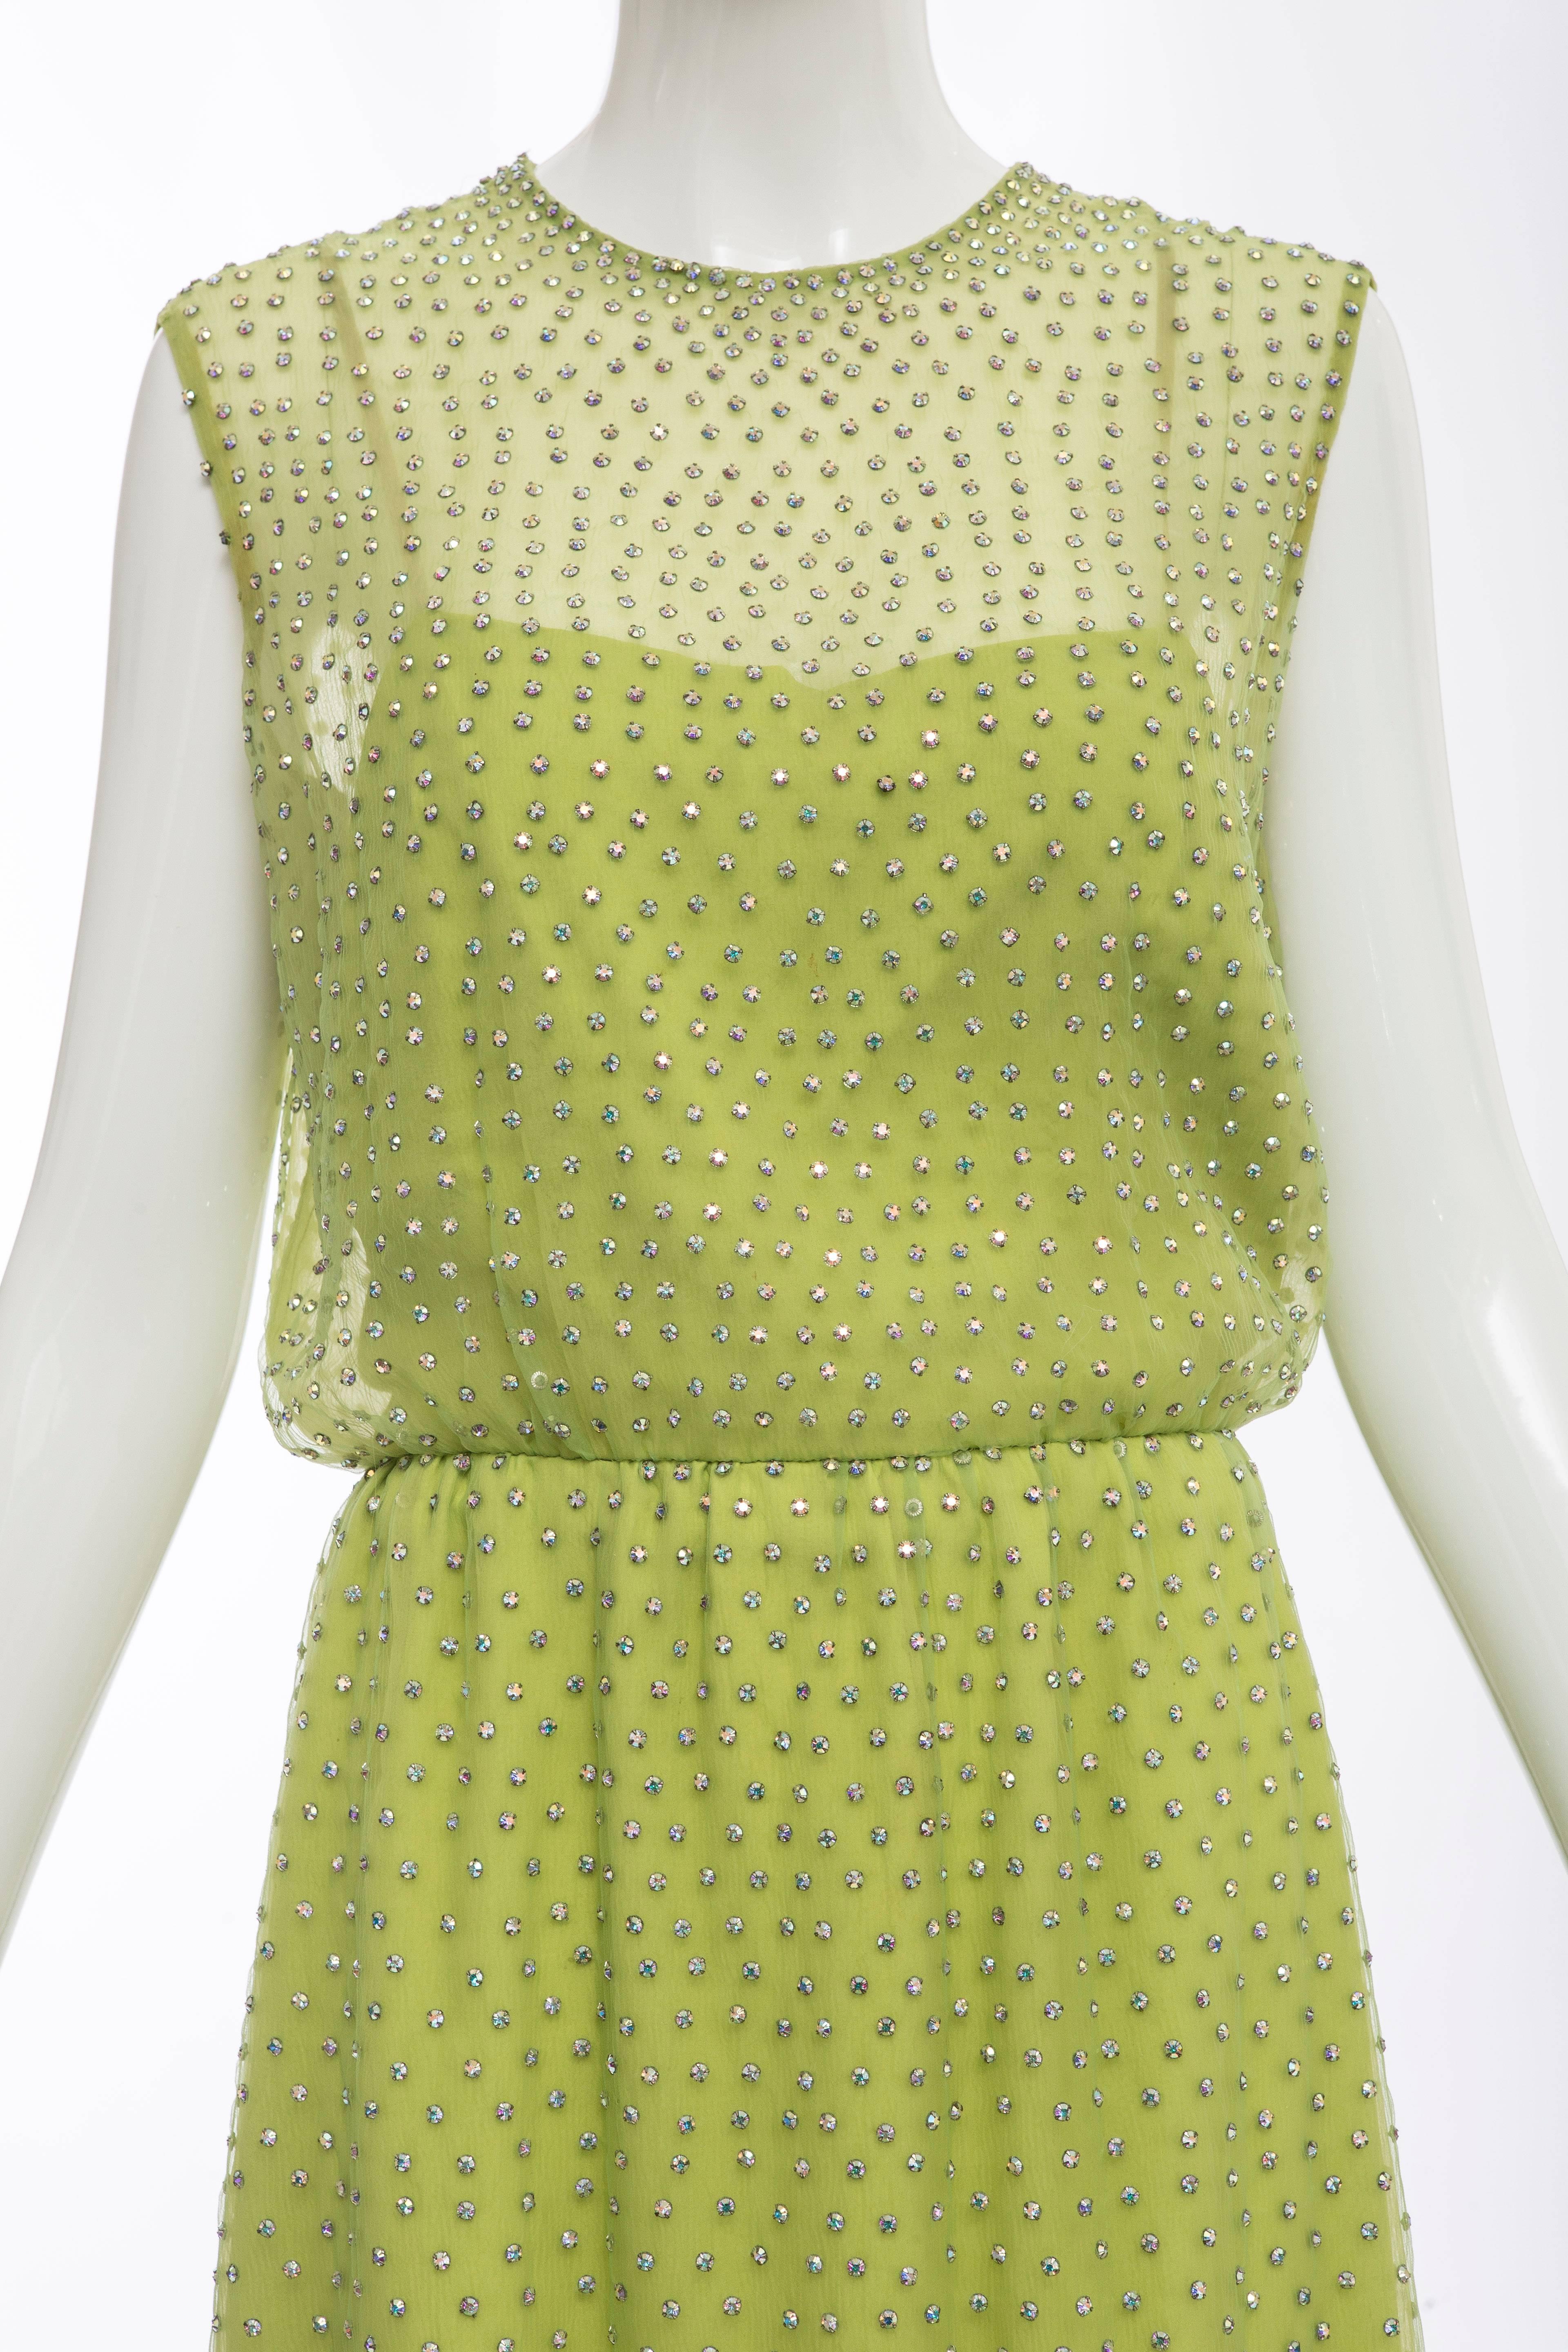 Harvey Berin designed by Karen Stark Silk Dress Prong Set Crystals, Circa 1960's For Sale 1